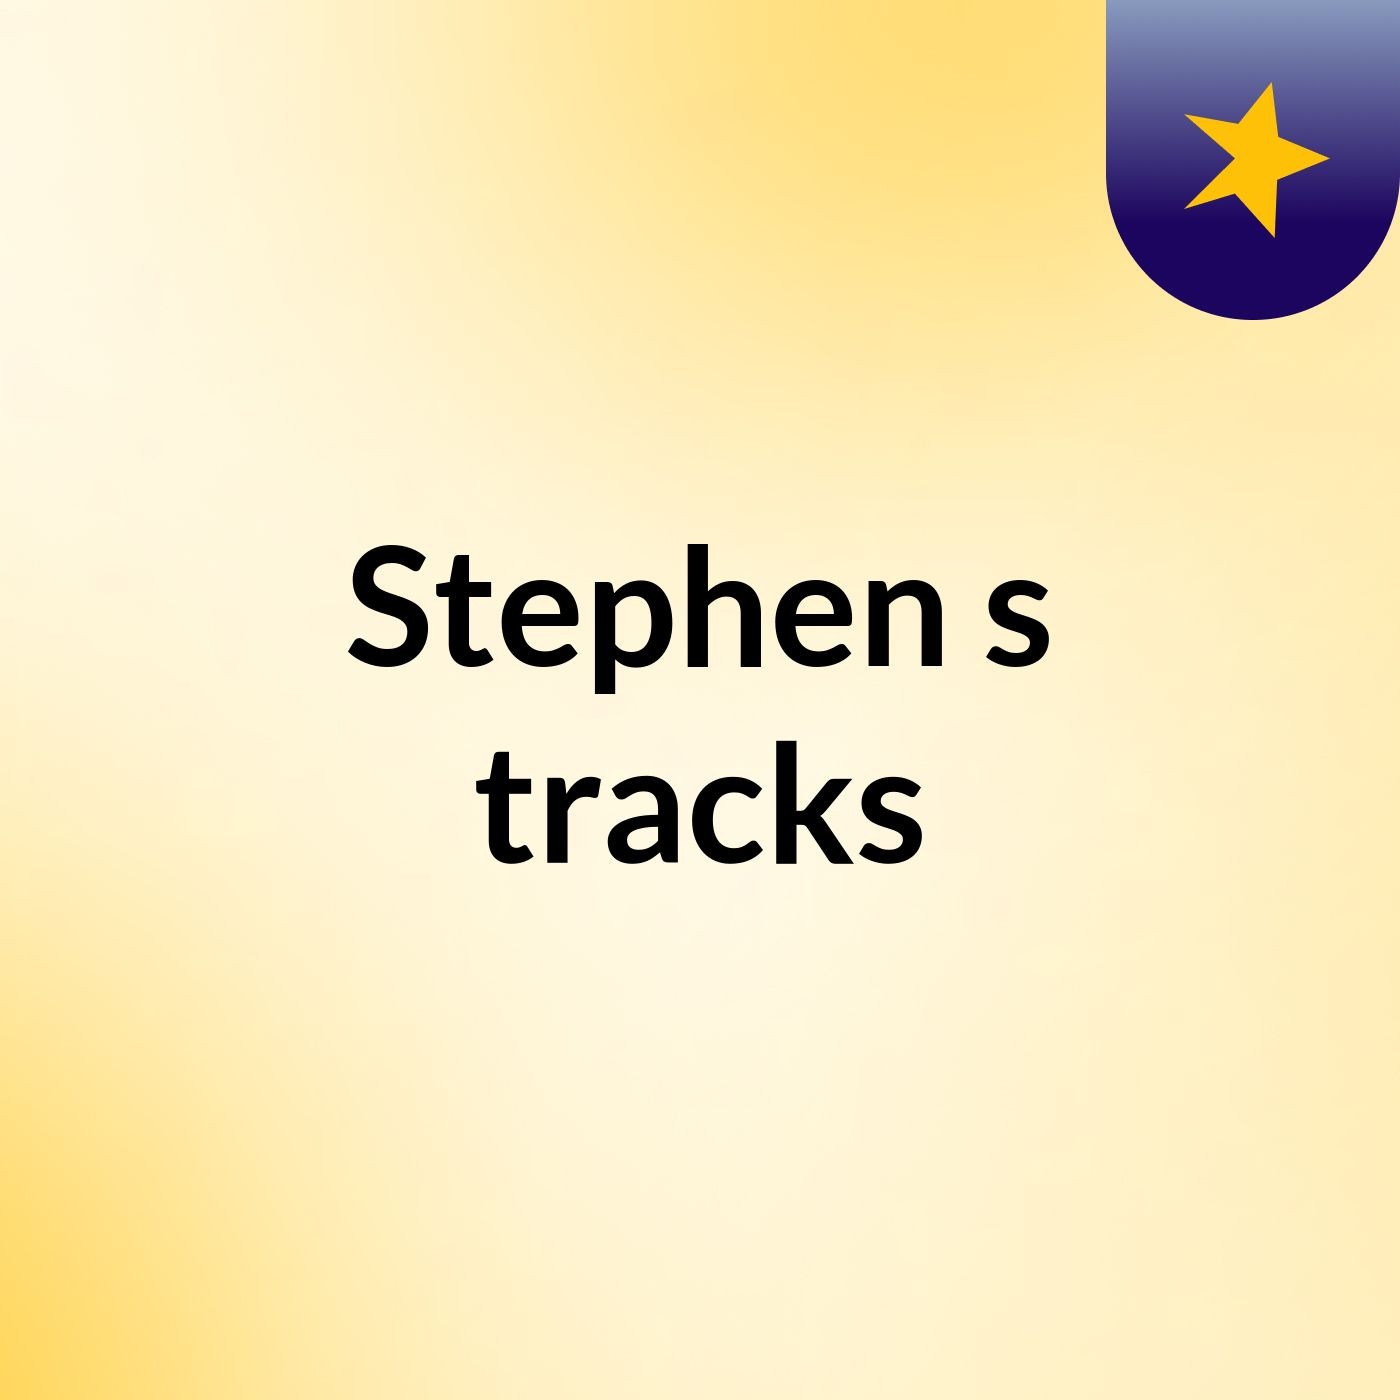 Stephen's tracks